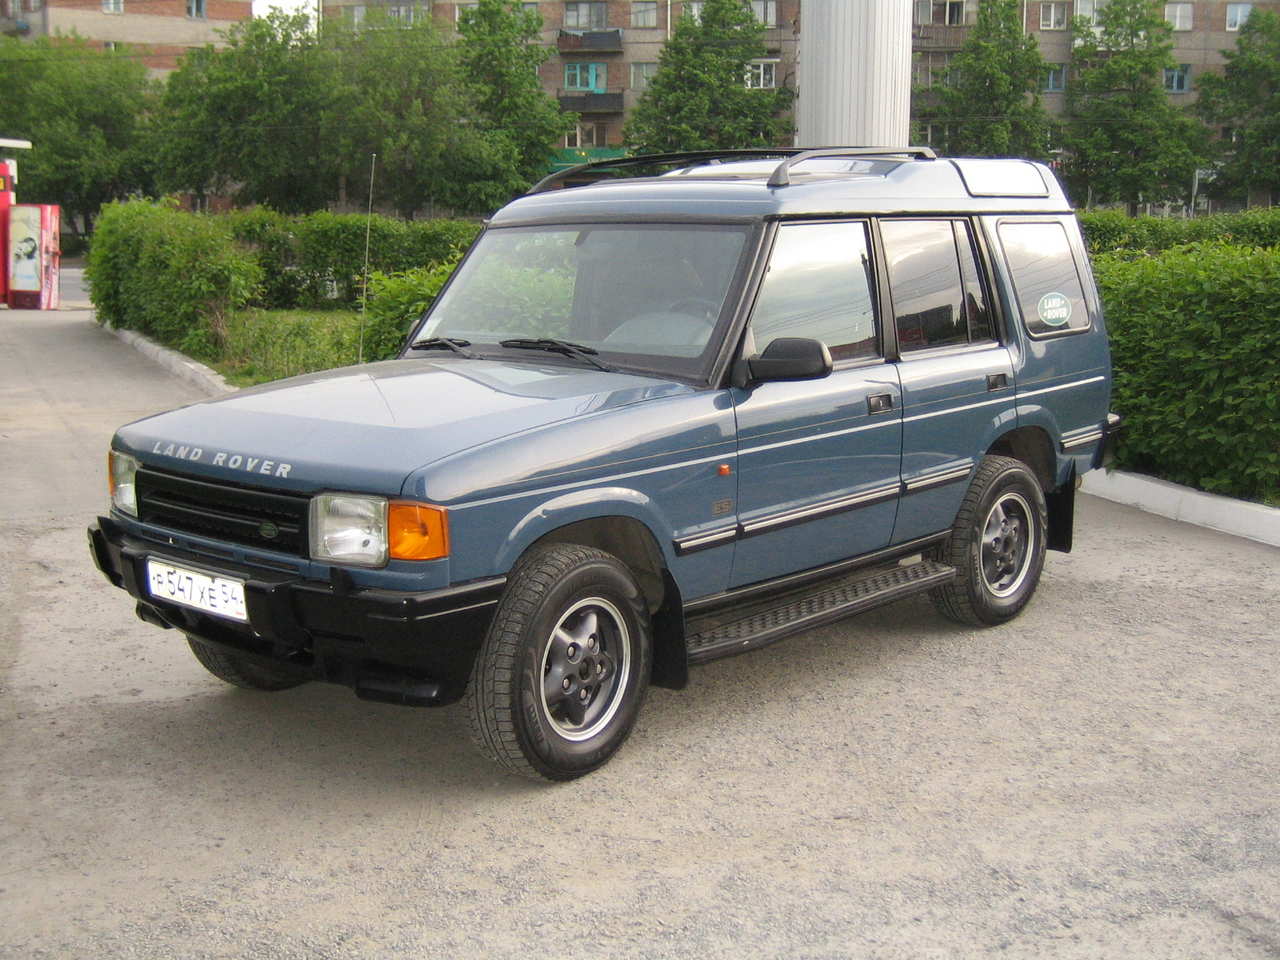 Купить дискавери 1. Land Rover Discovery 1996. Ленд Ровер Дискавери 1. Range Rover Discovery 1990. Range Rover 1996.